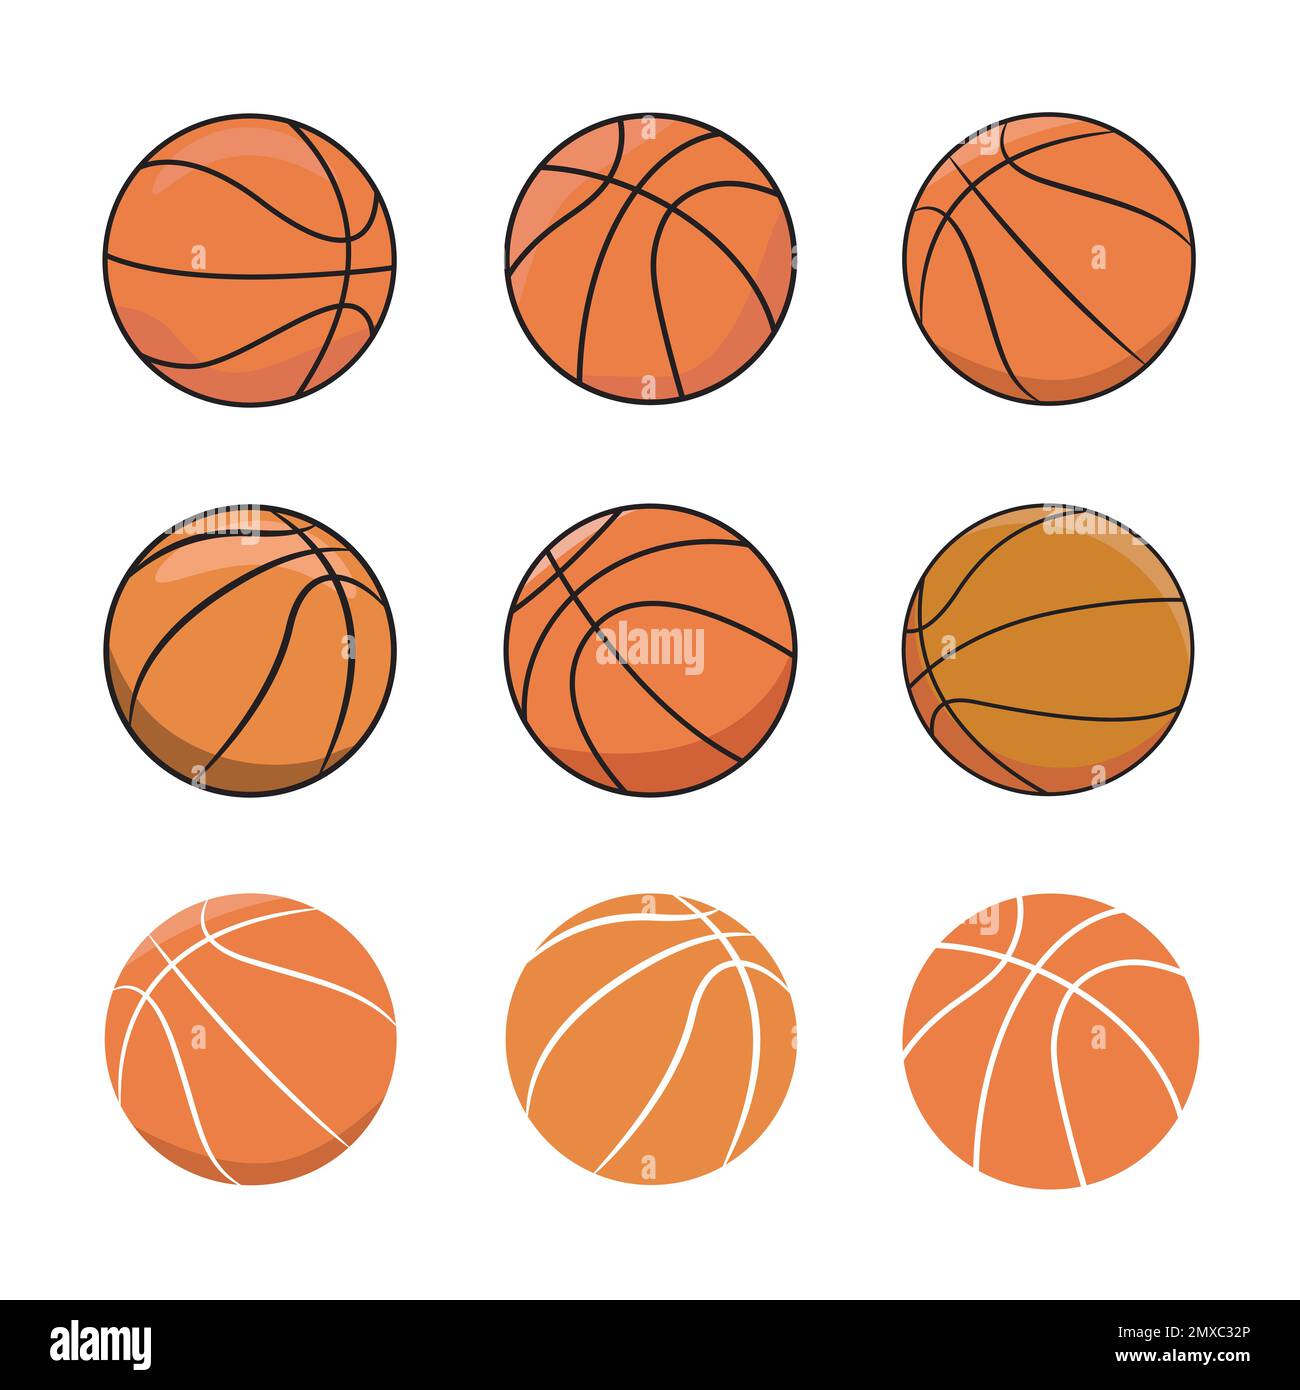 Basketballs illustration, Basketballs collection.Basketball sports icon. Stock Vector